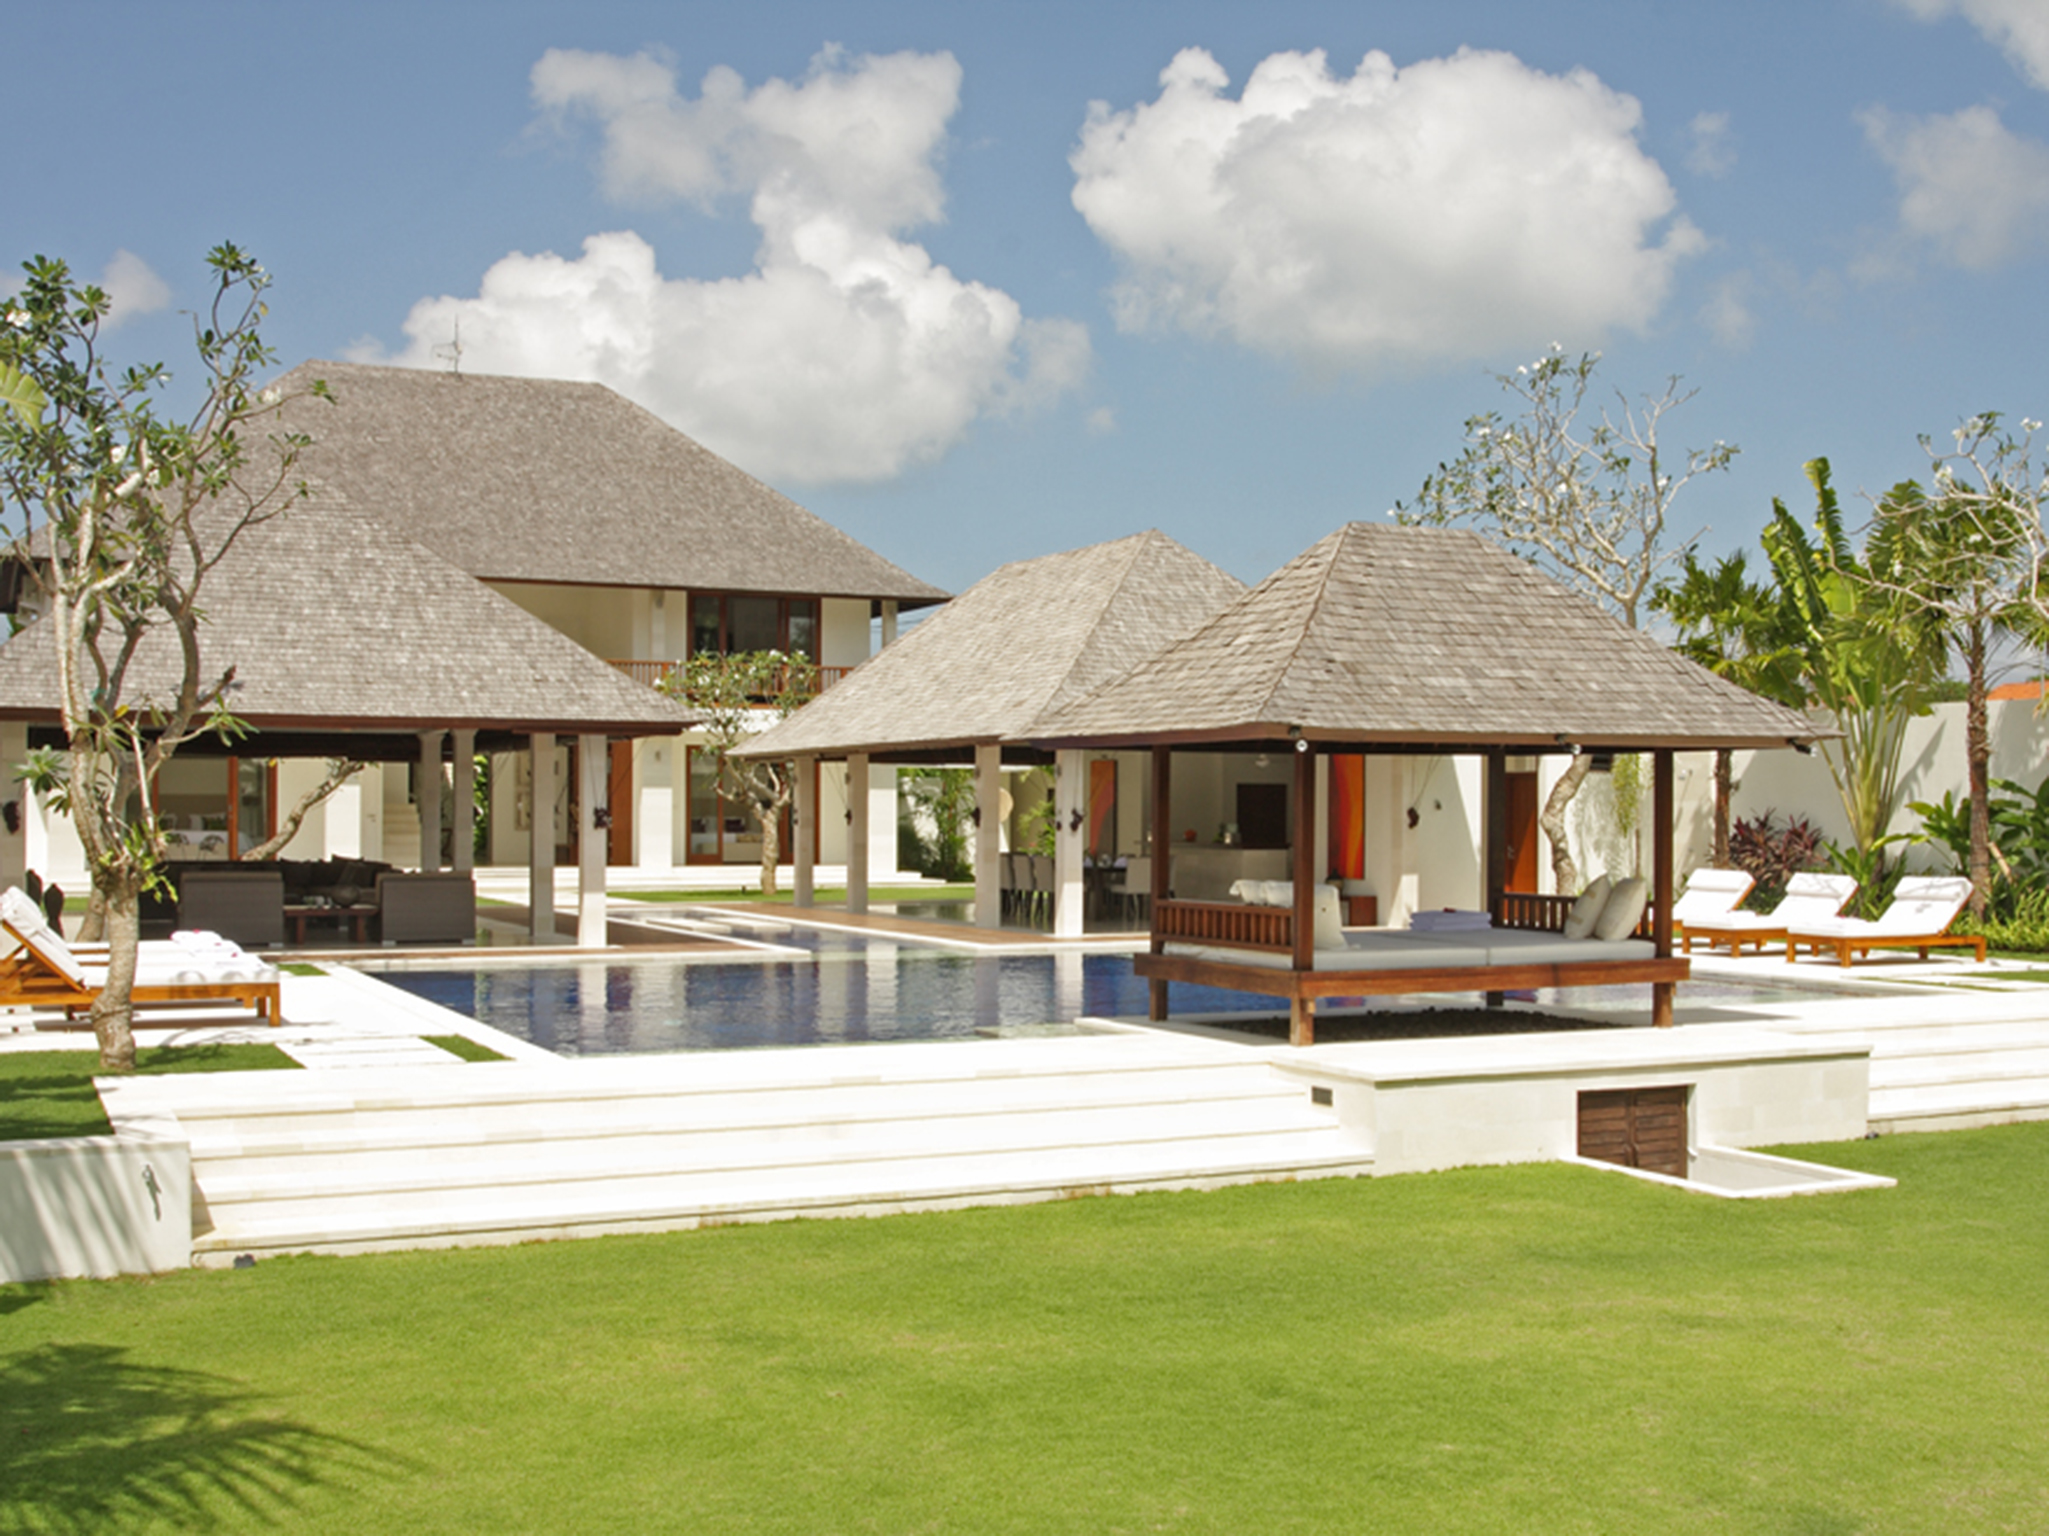 Villa Asante - Pool and lawn - Villa Asante, Canggu, Bali